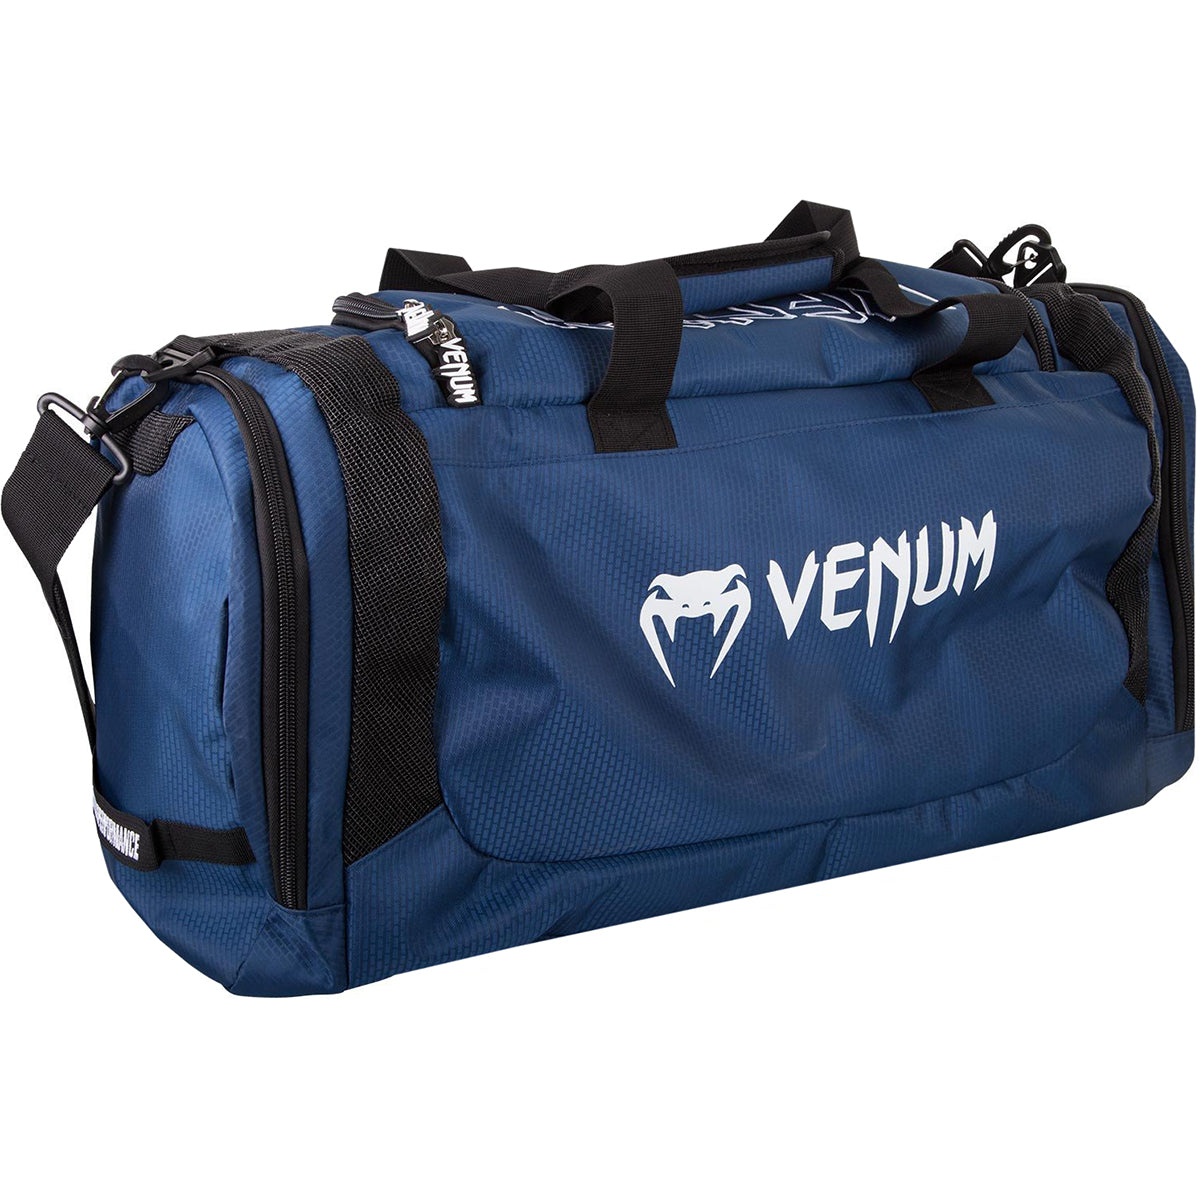 Venum Trainer Lite Sport Duffel Bag - Navy Blue/White Venum